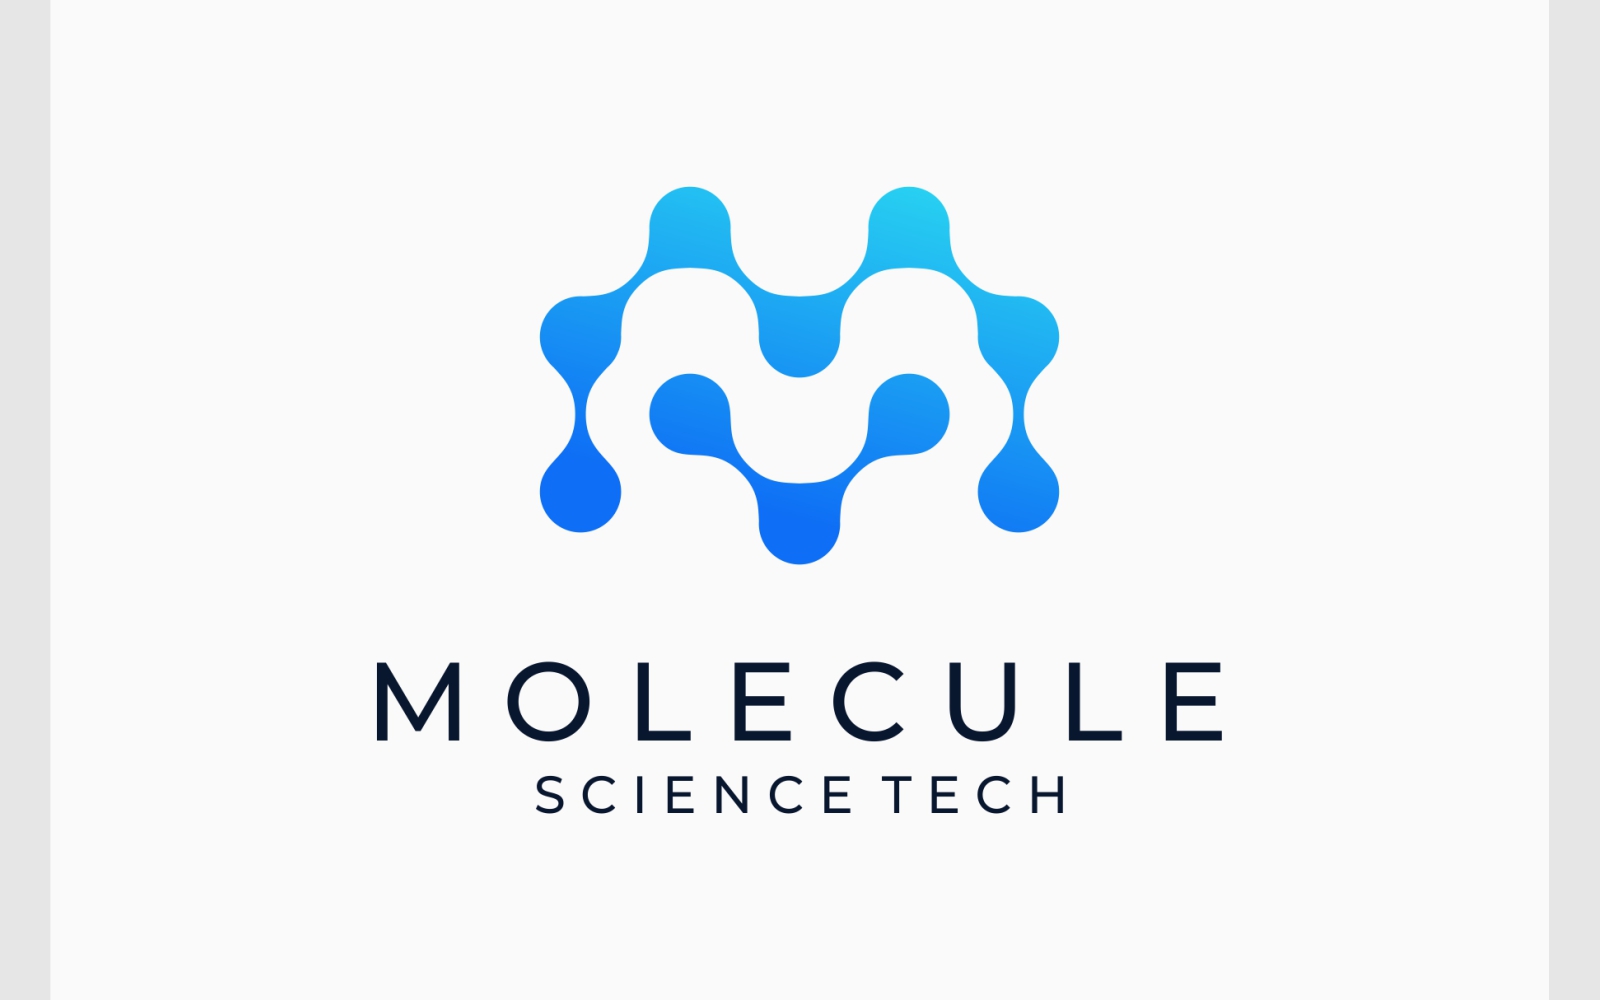 Letter M Molecule Science Tech Logo